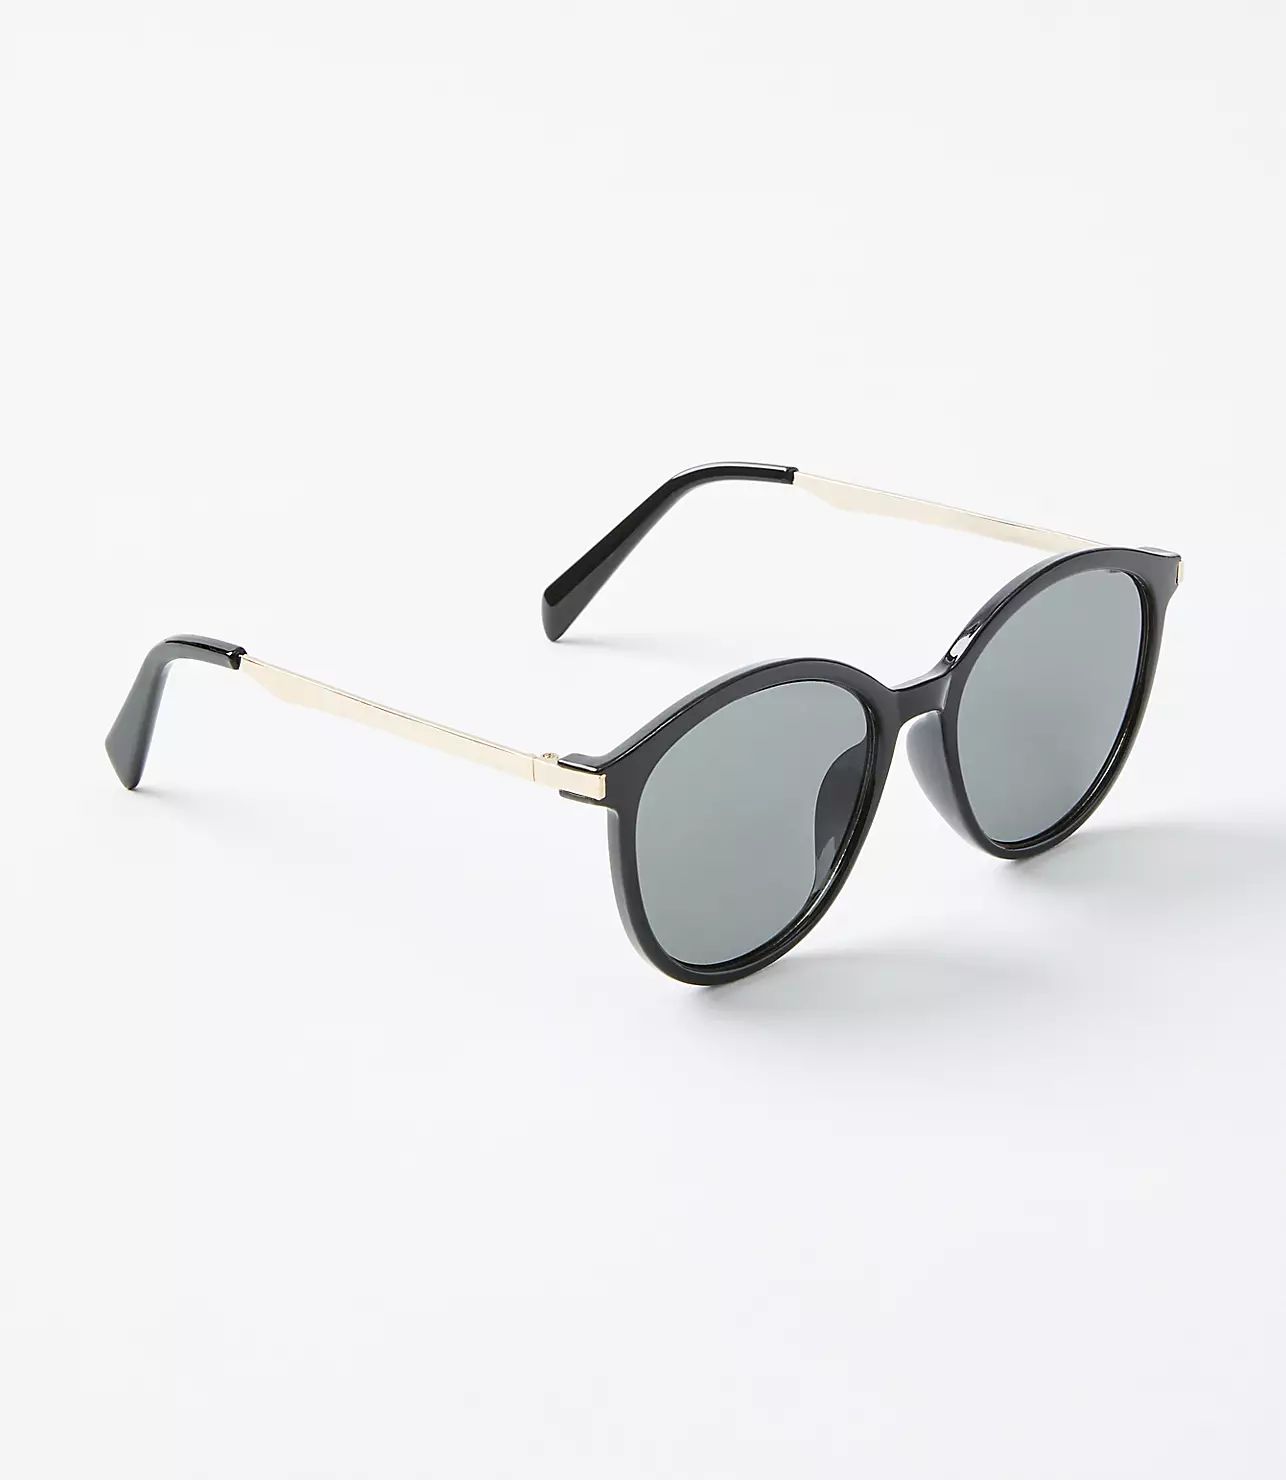 Metallic Arm Round Sunglasses | LOFT